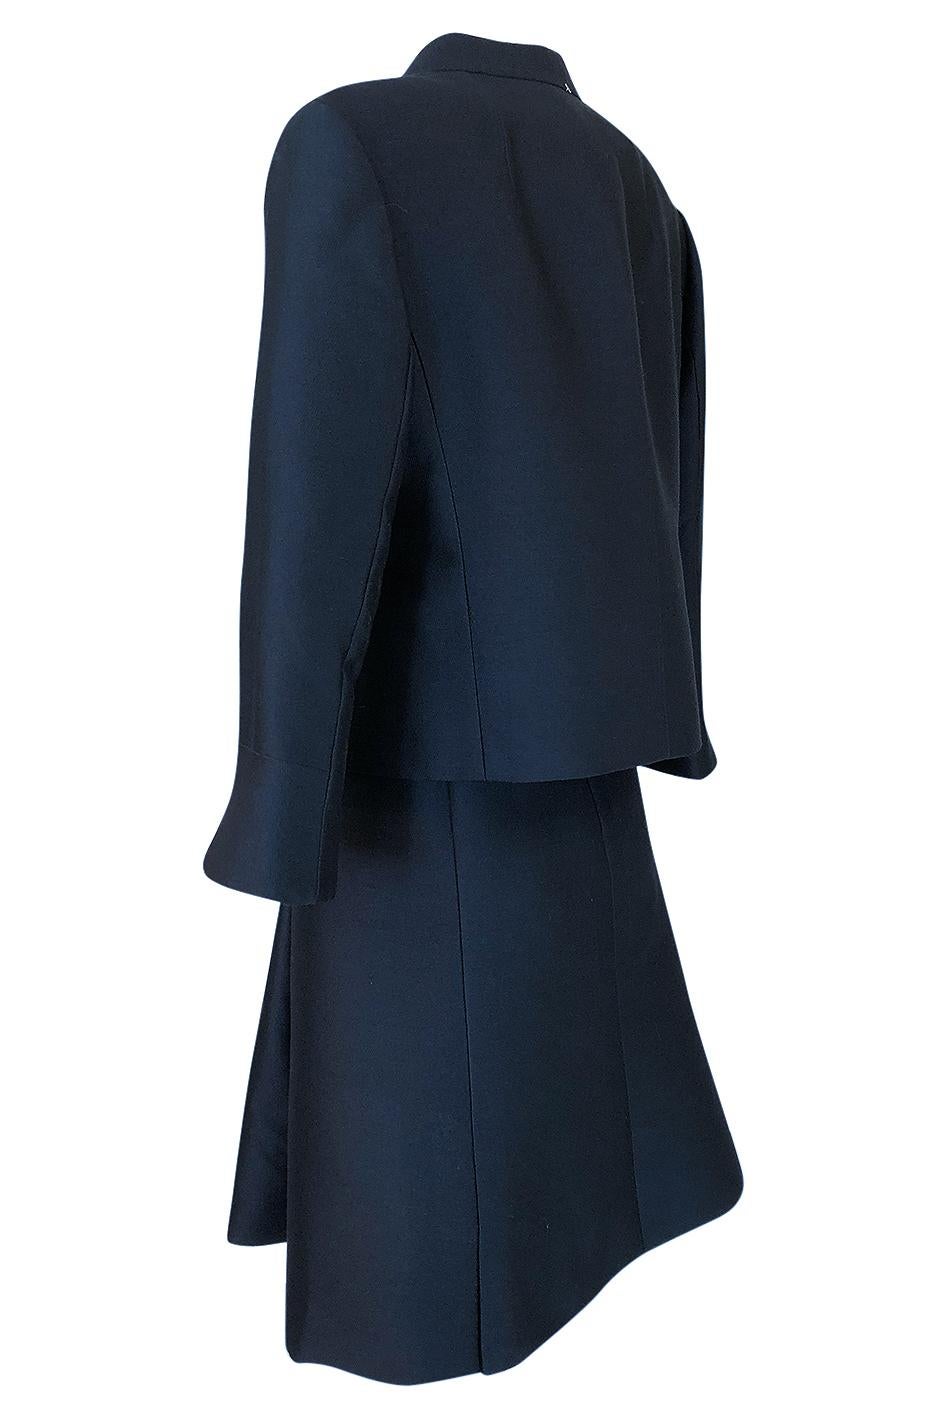 Women's 1950s Christian Dior Midnight Blue Demi-Couture 3 Piece Dress Suit